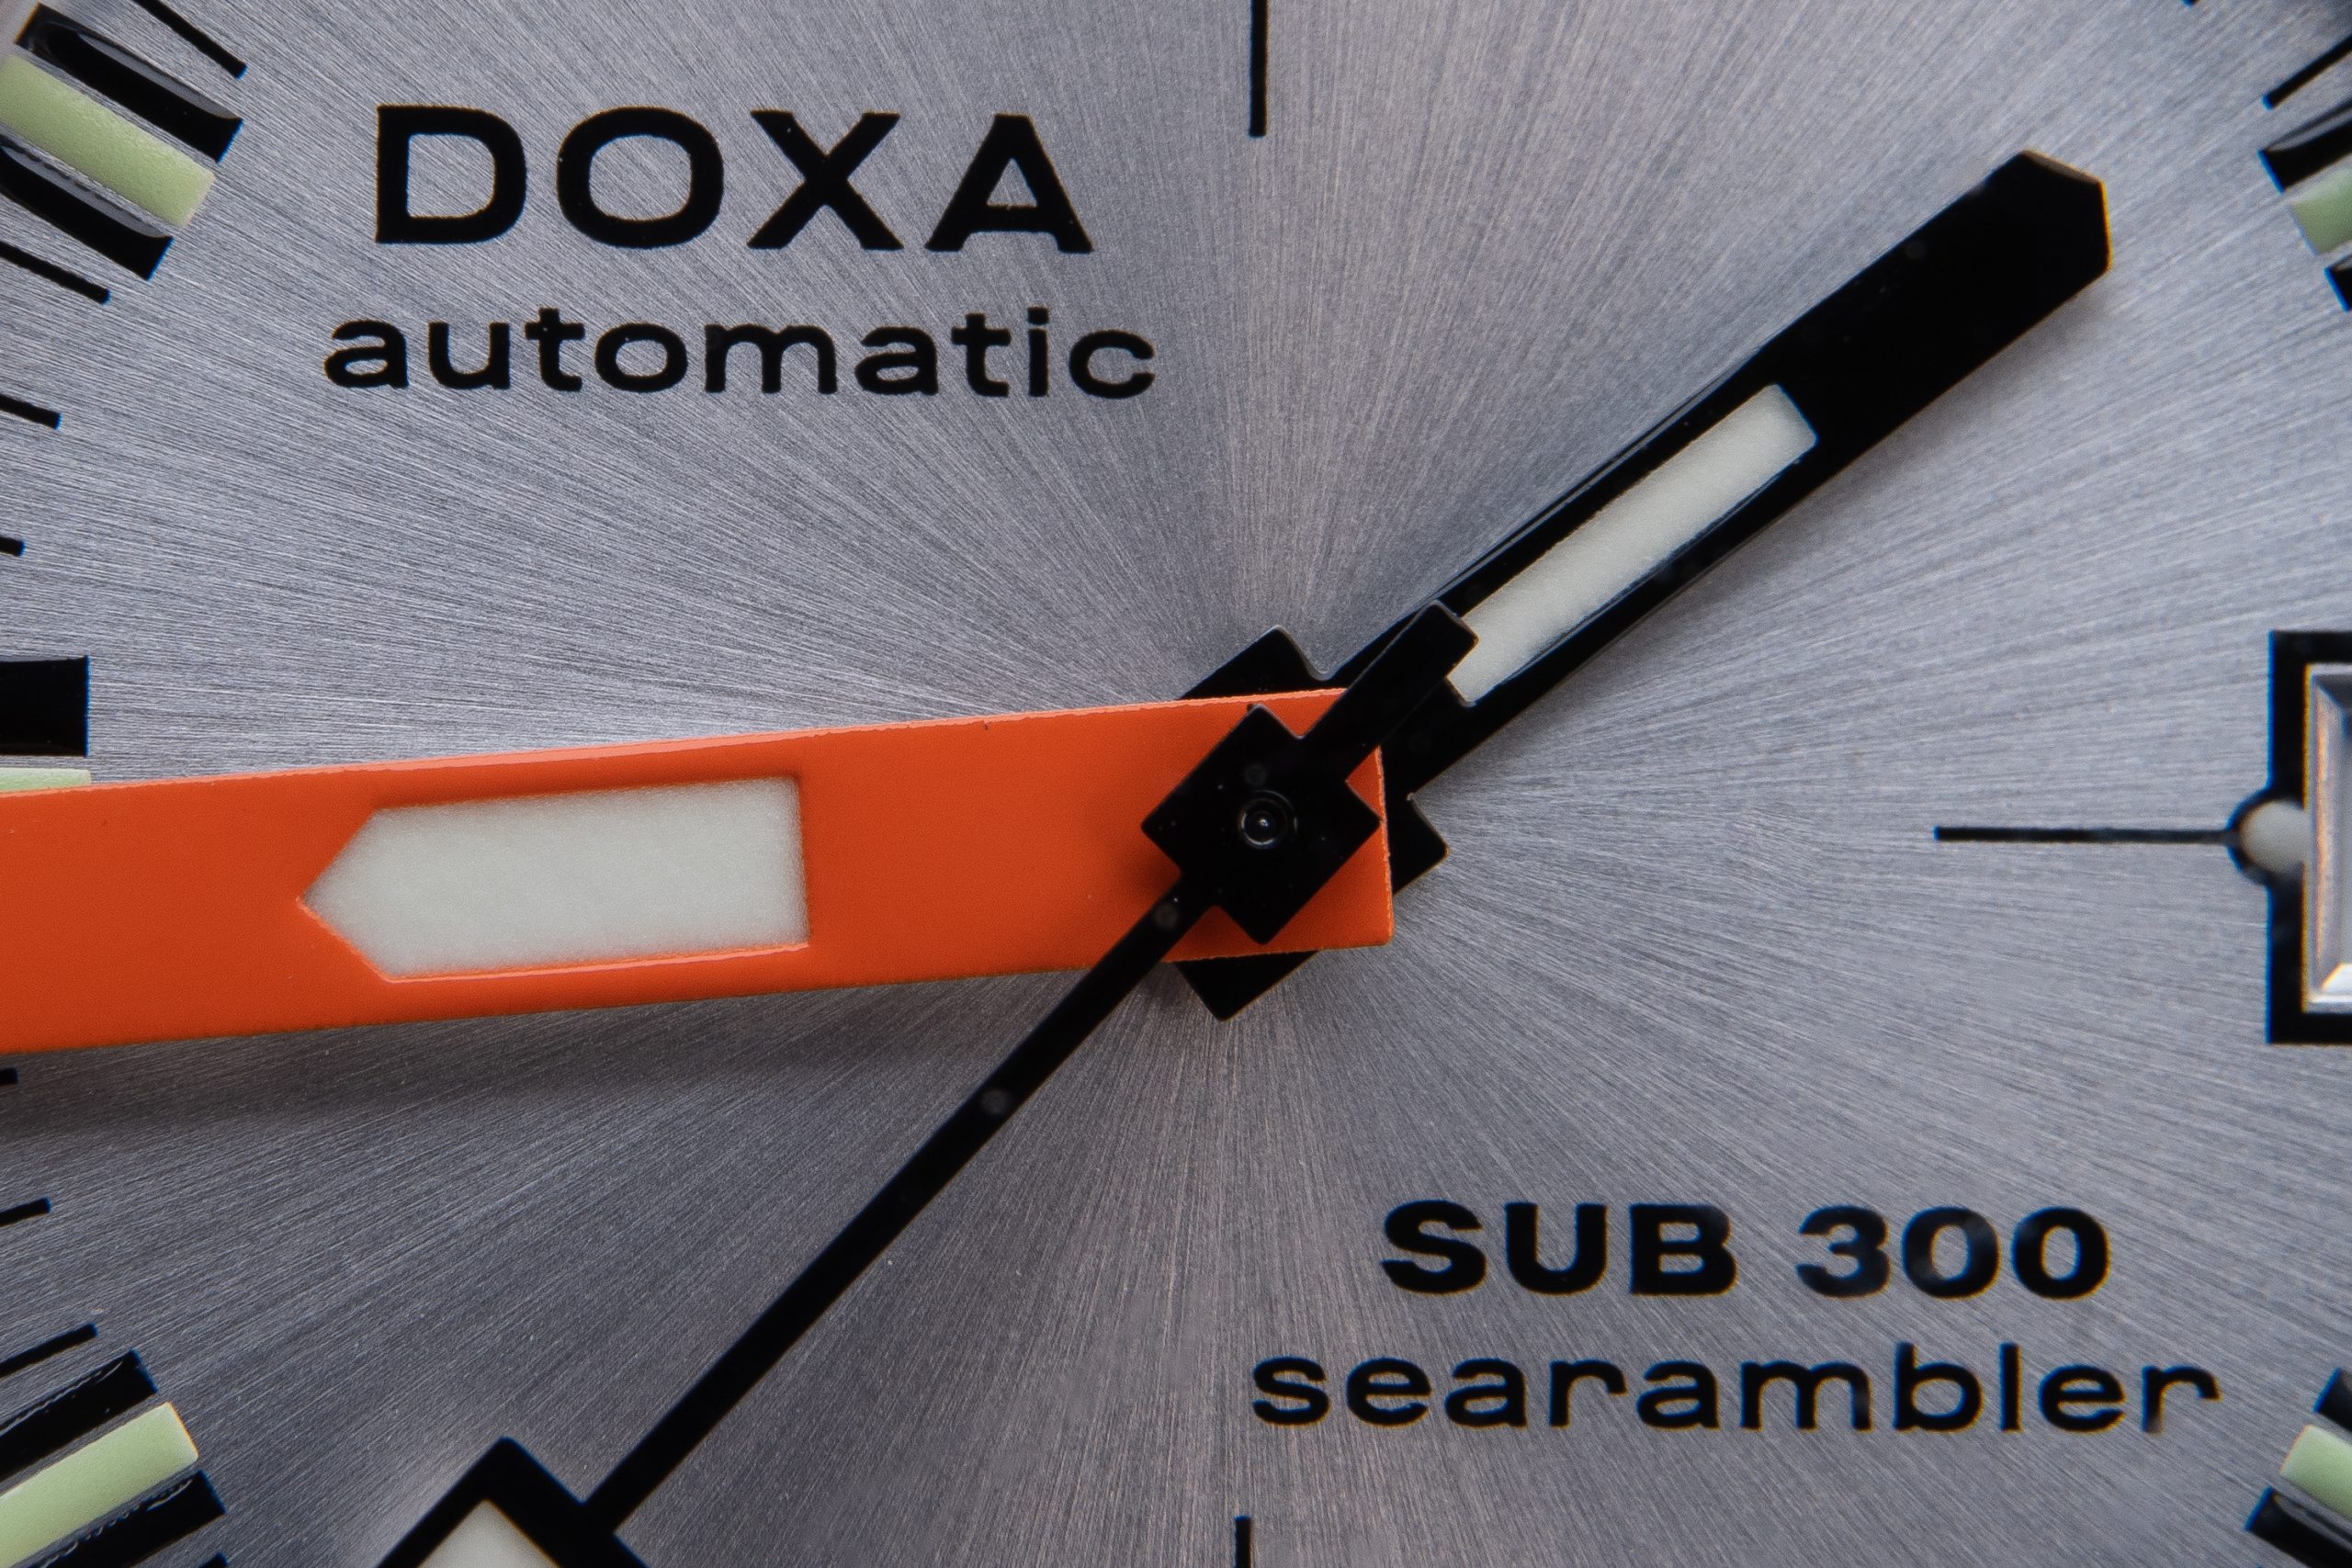 Doxa SUB 300 Searambler Dive Watch